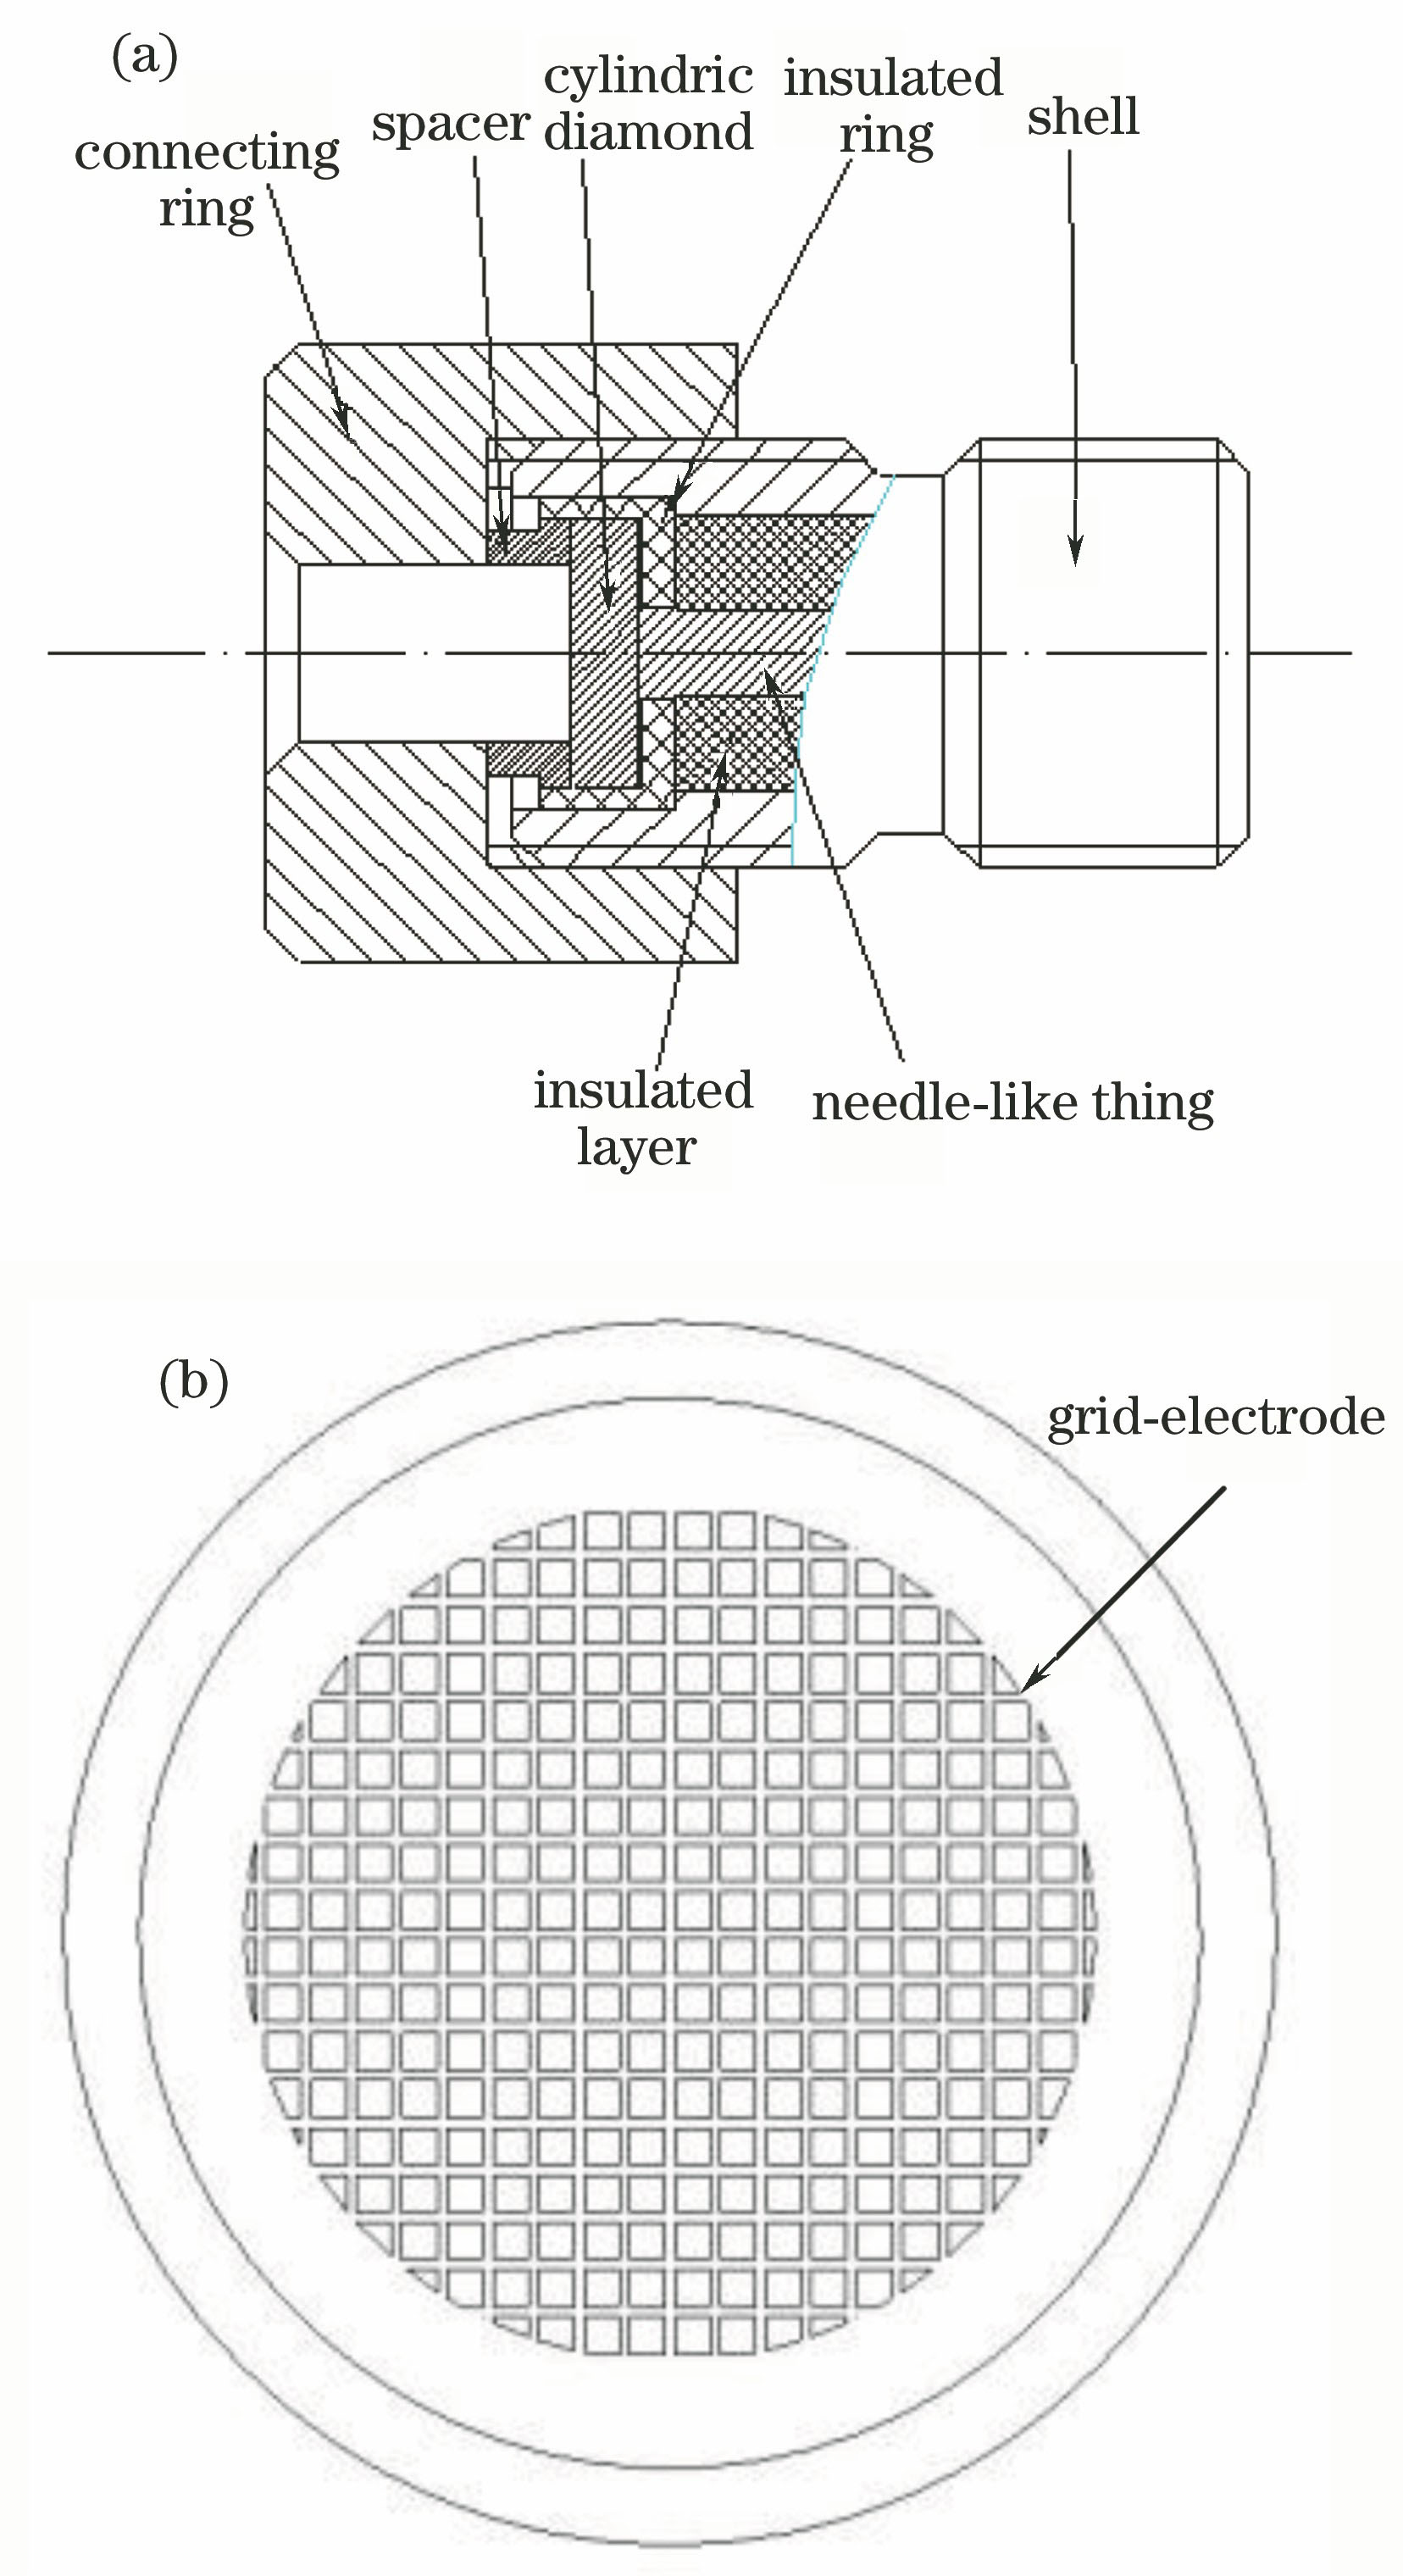 (a) Structure of CVD diamond detector; (b) diamond grid electrode